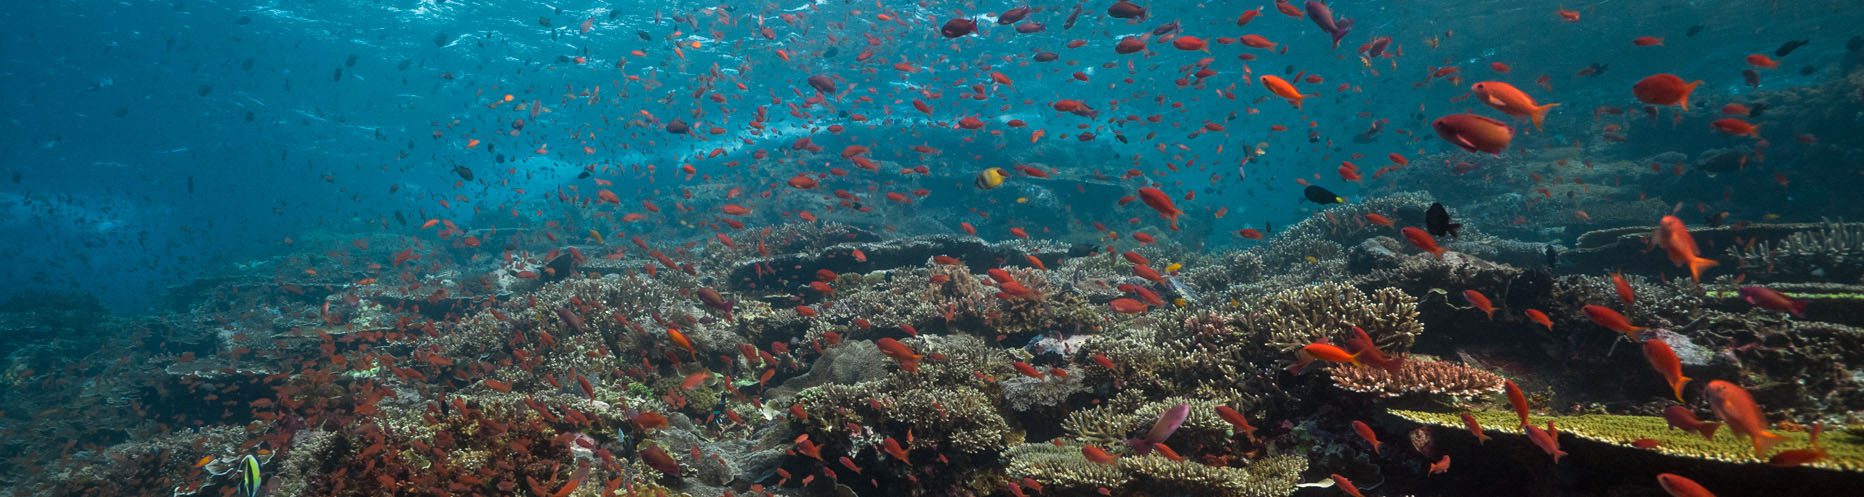 Komodo national park indonesia coral banner